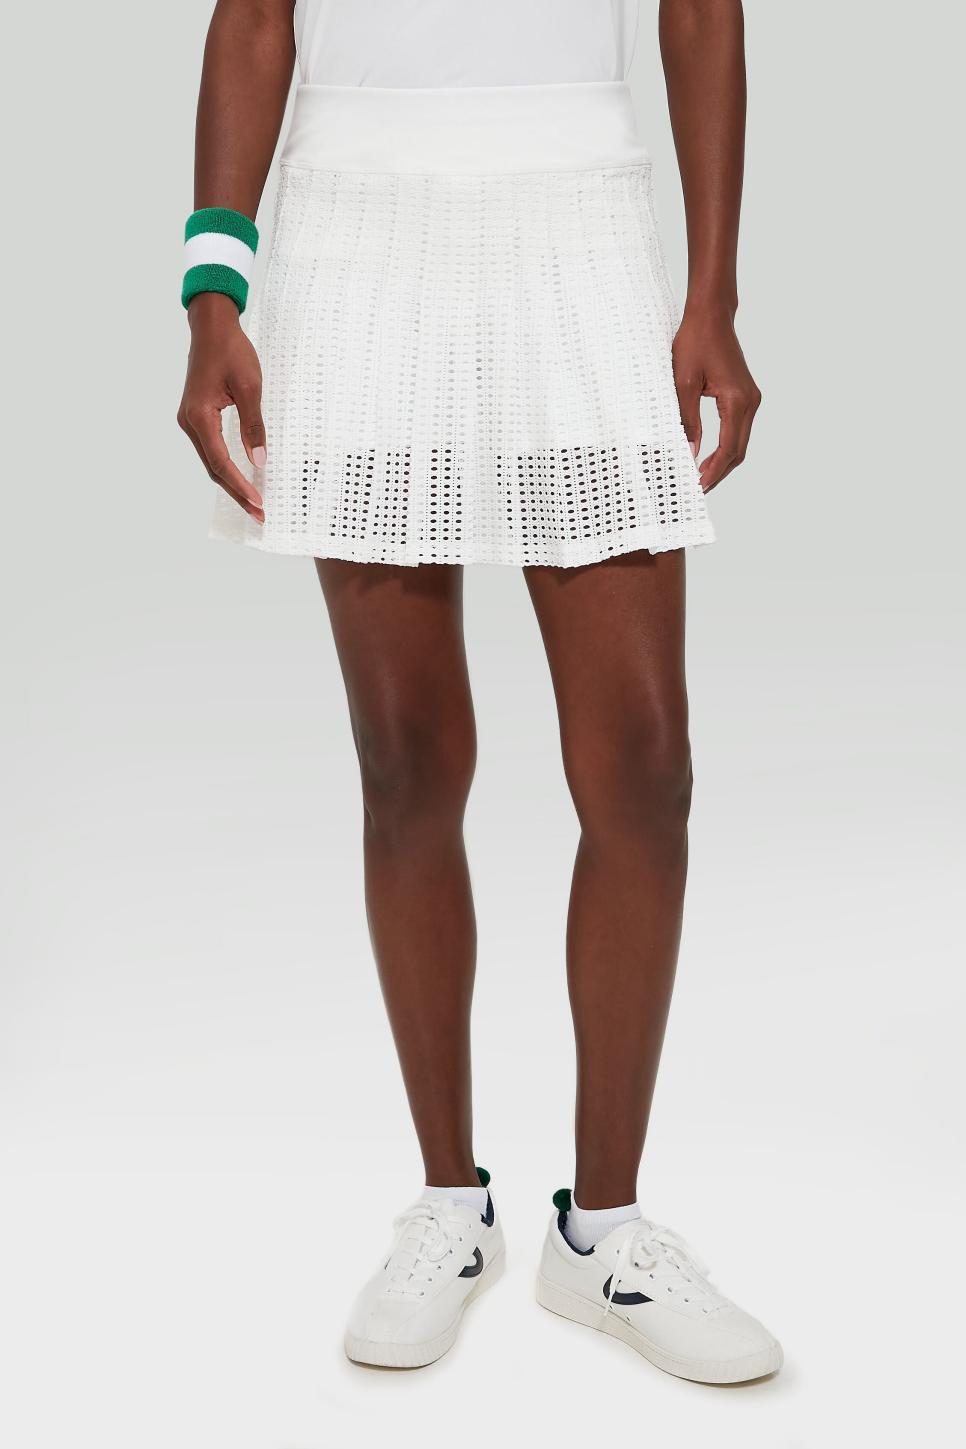 rx-tuckernucktuckernuck-white-cane-15-inch-tennis-skirt.jpeg